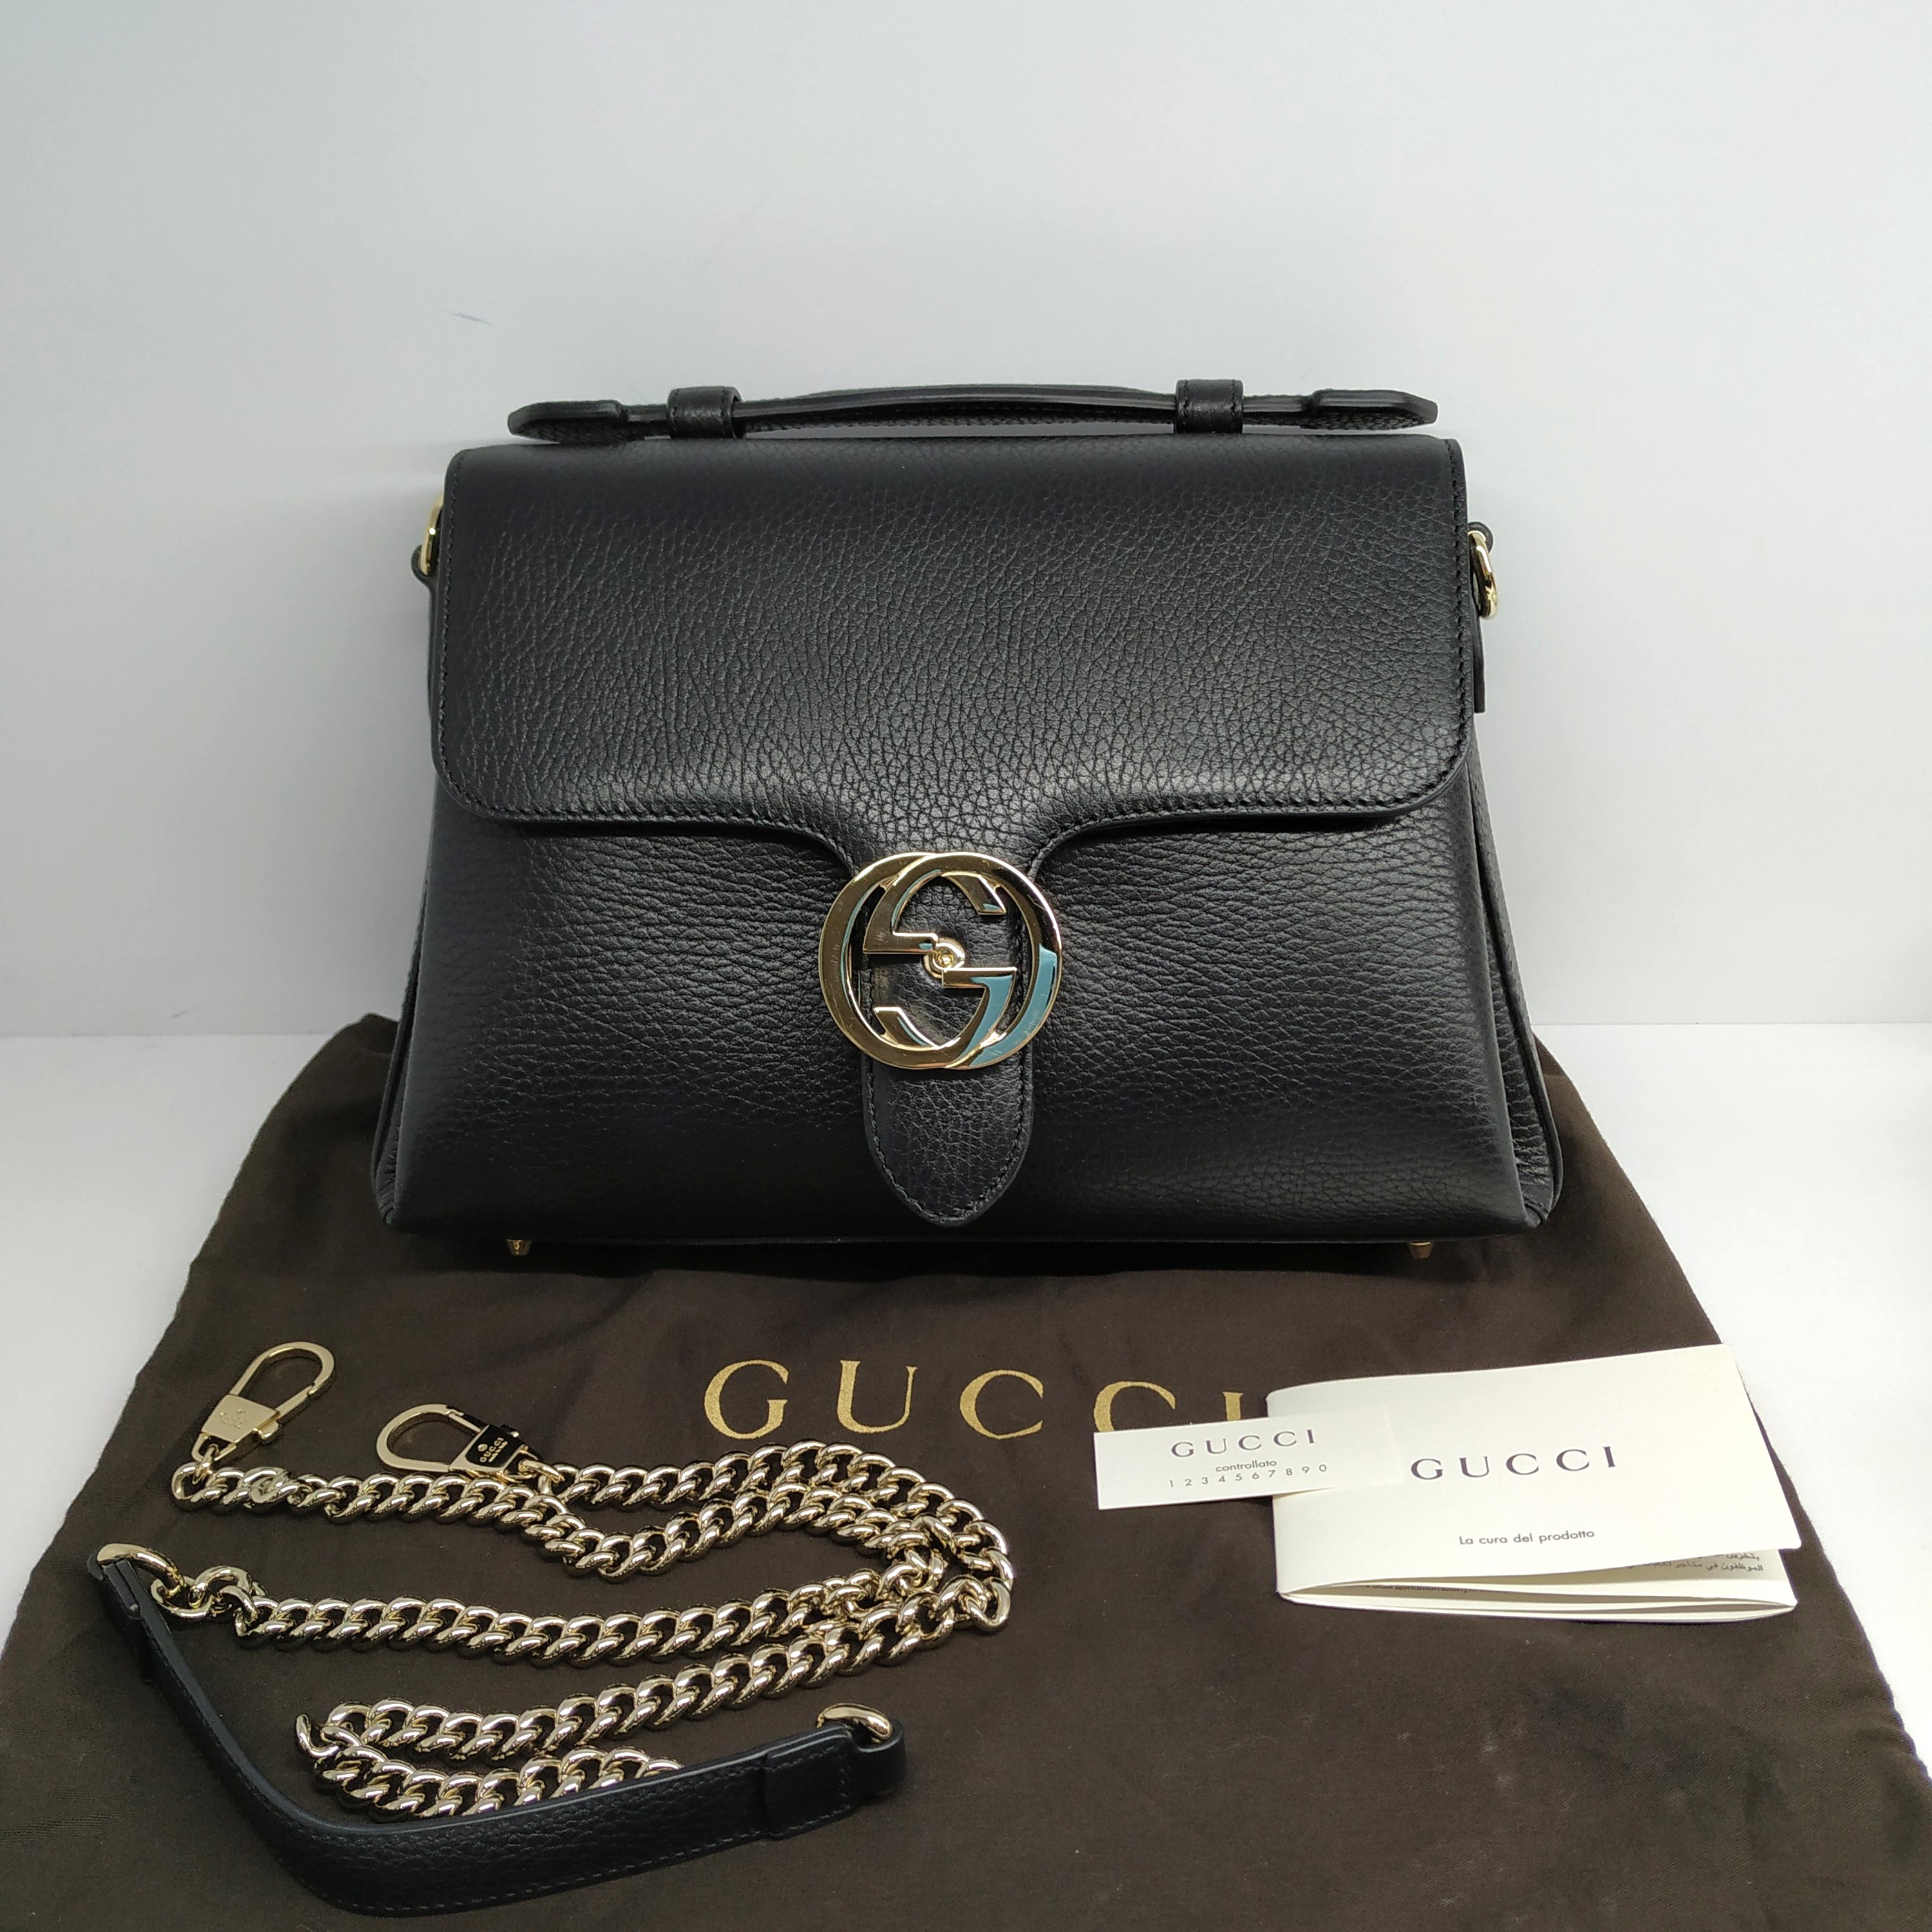 Gucci Interlocking G Black Leather Chain Shoulder Bag 510302